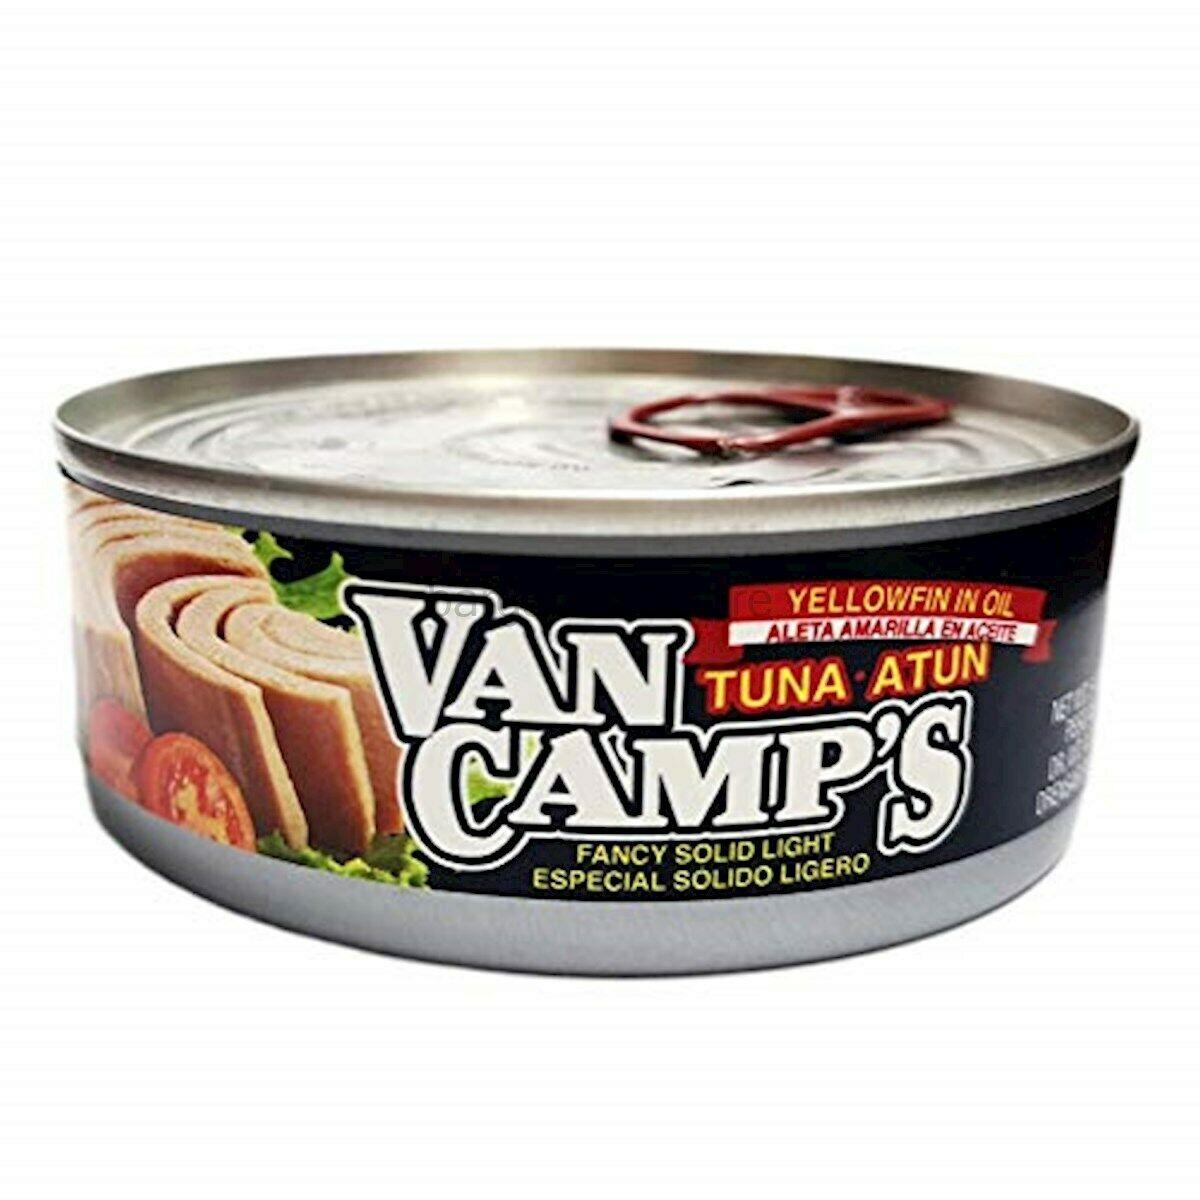 Van Camp's - Yellowfin Tuna In Oil 5.00 oz